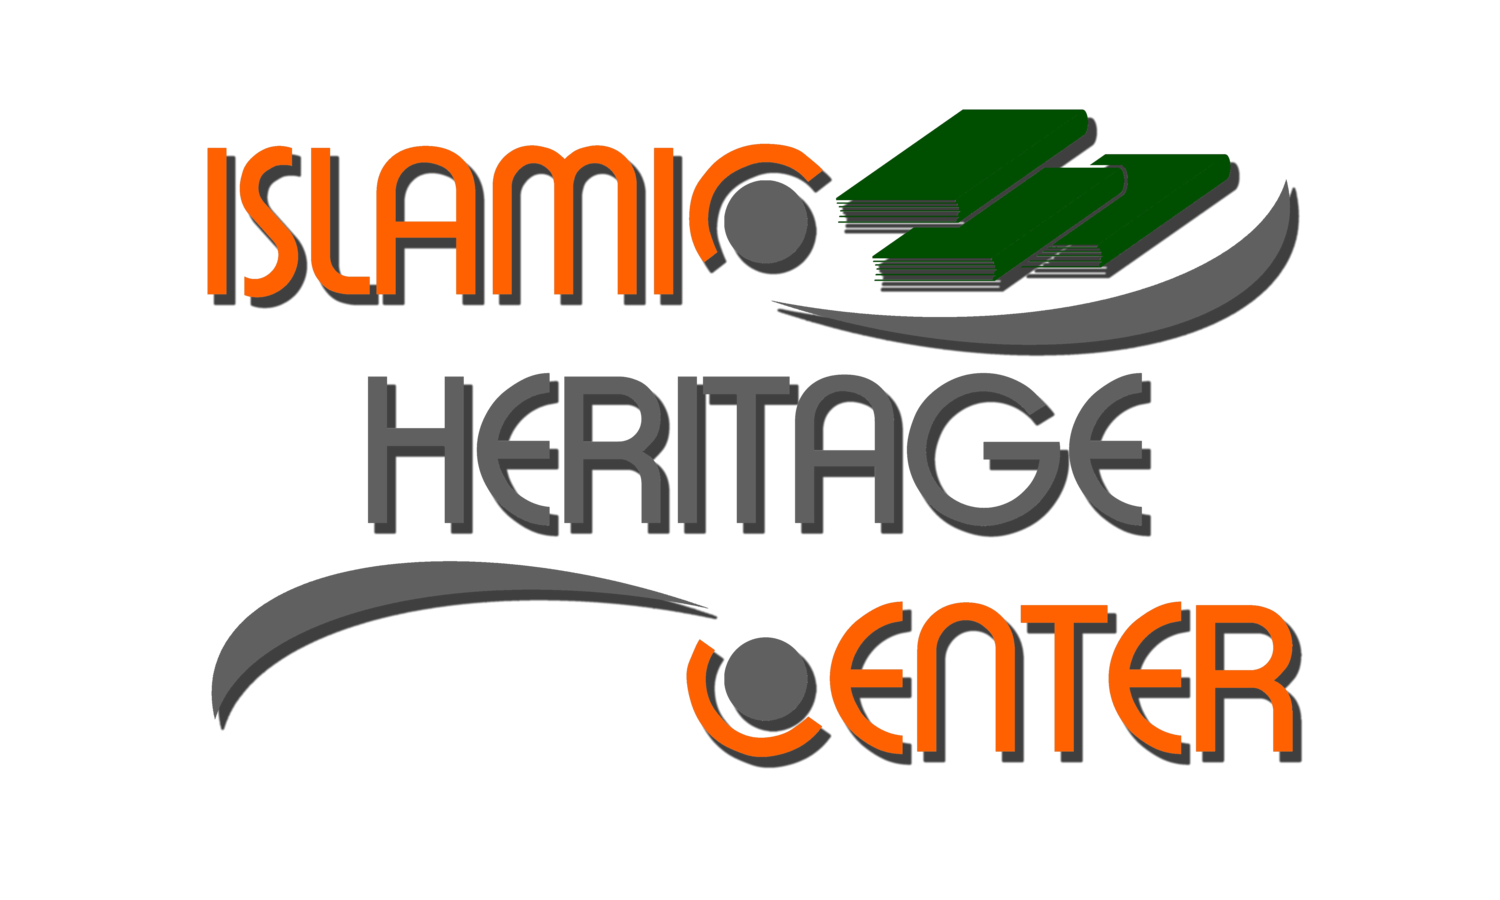 Islamic Heritage Center